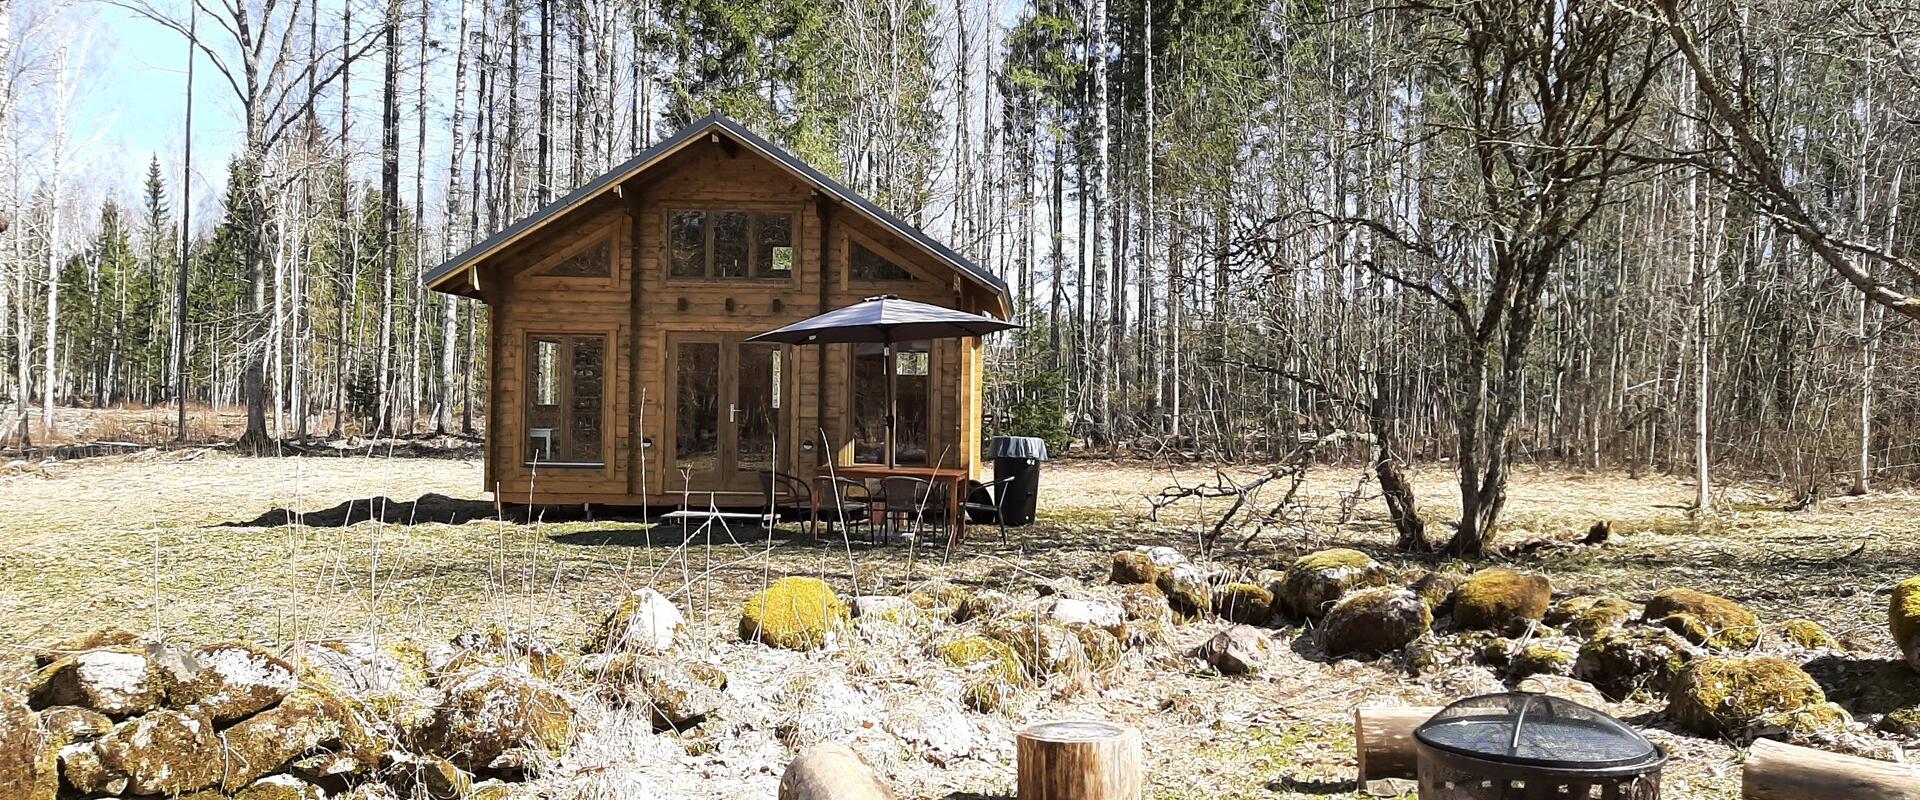 Raistiko off-grid cabin